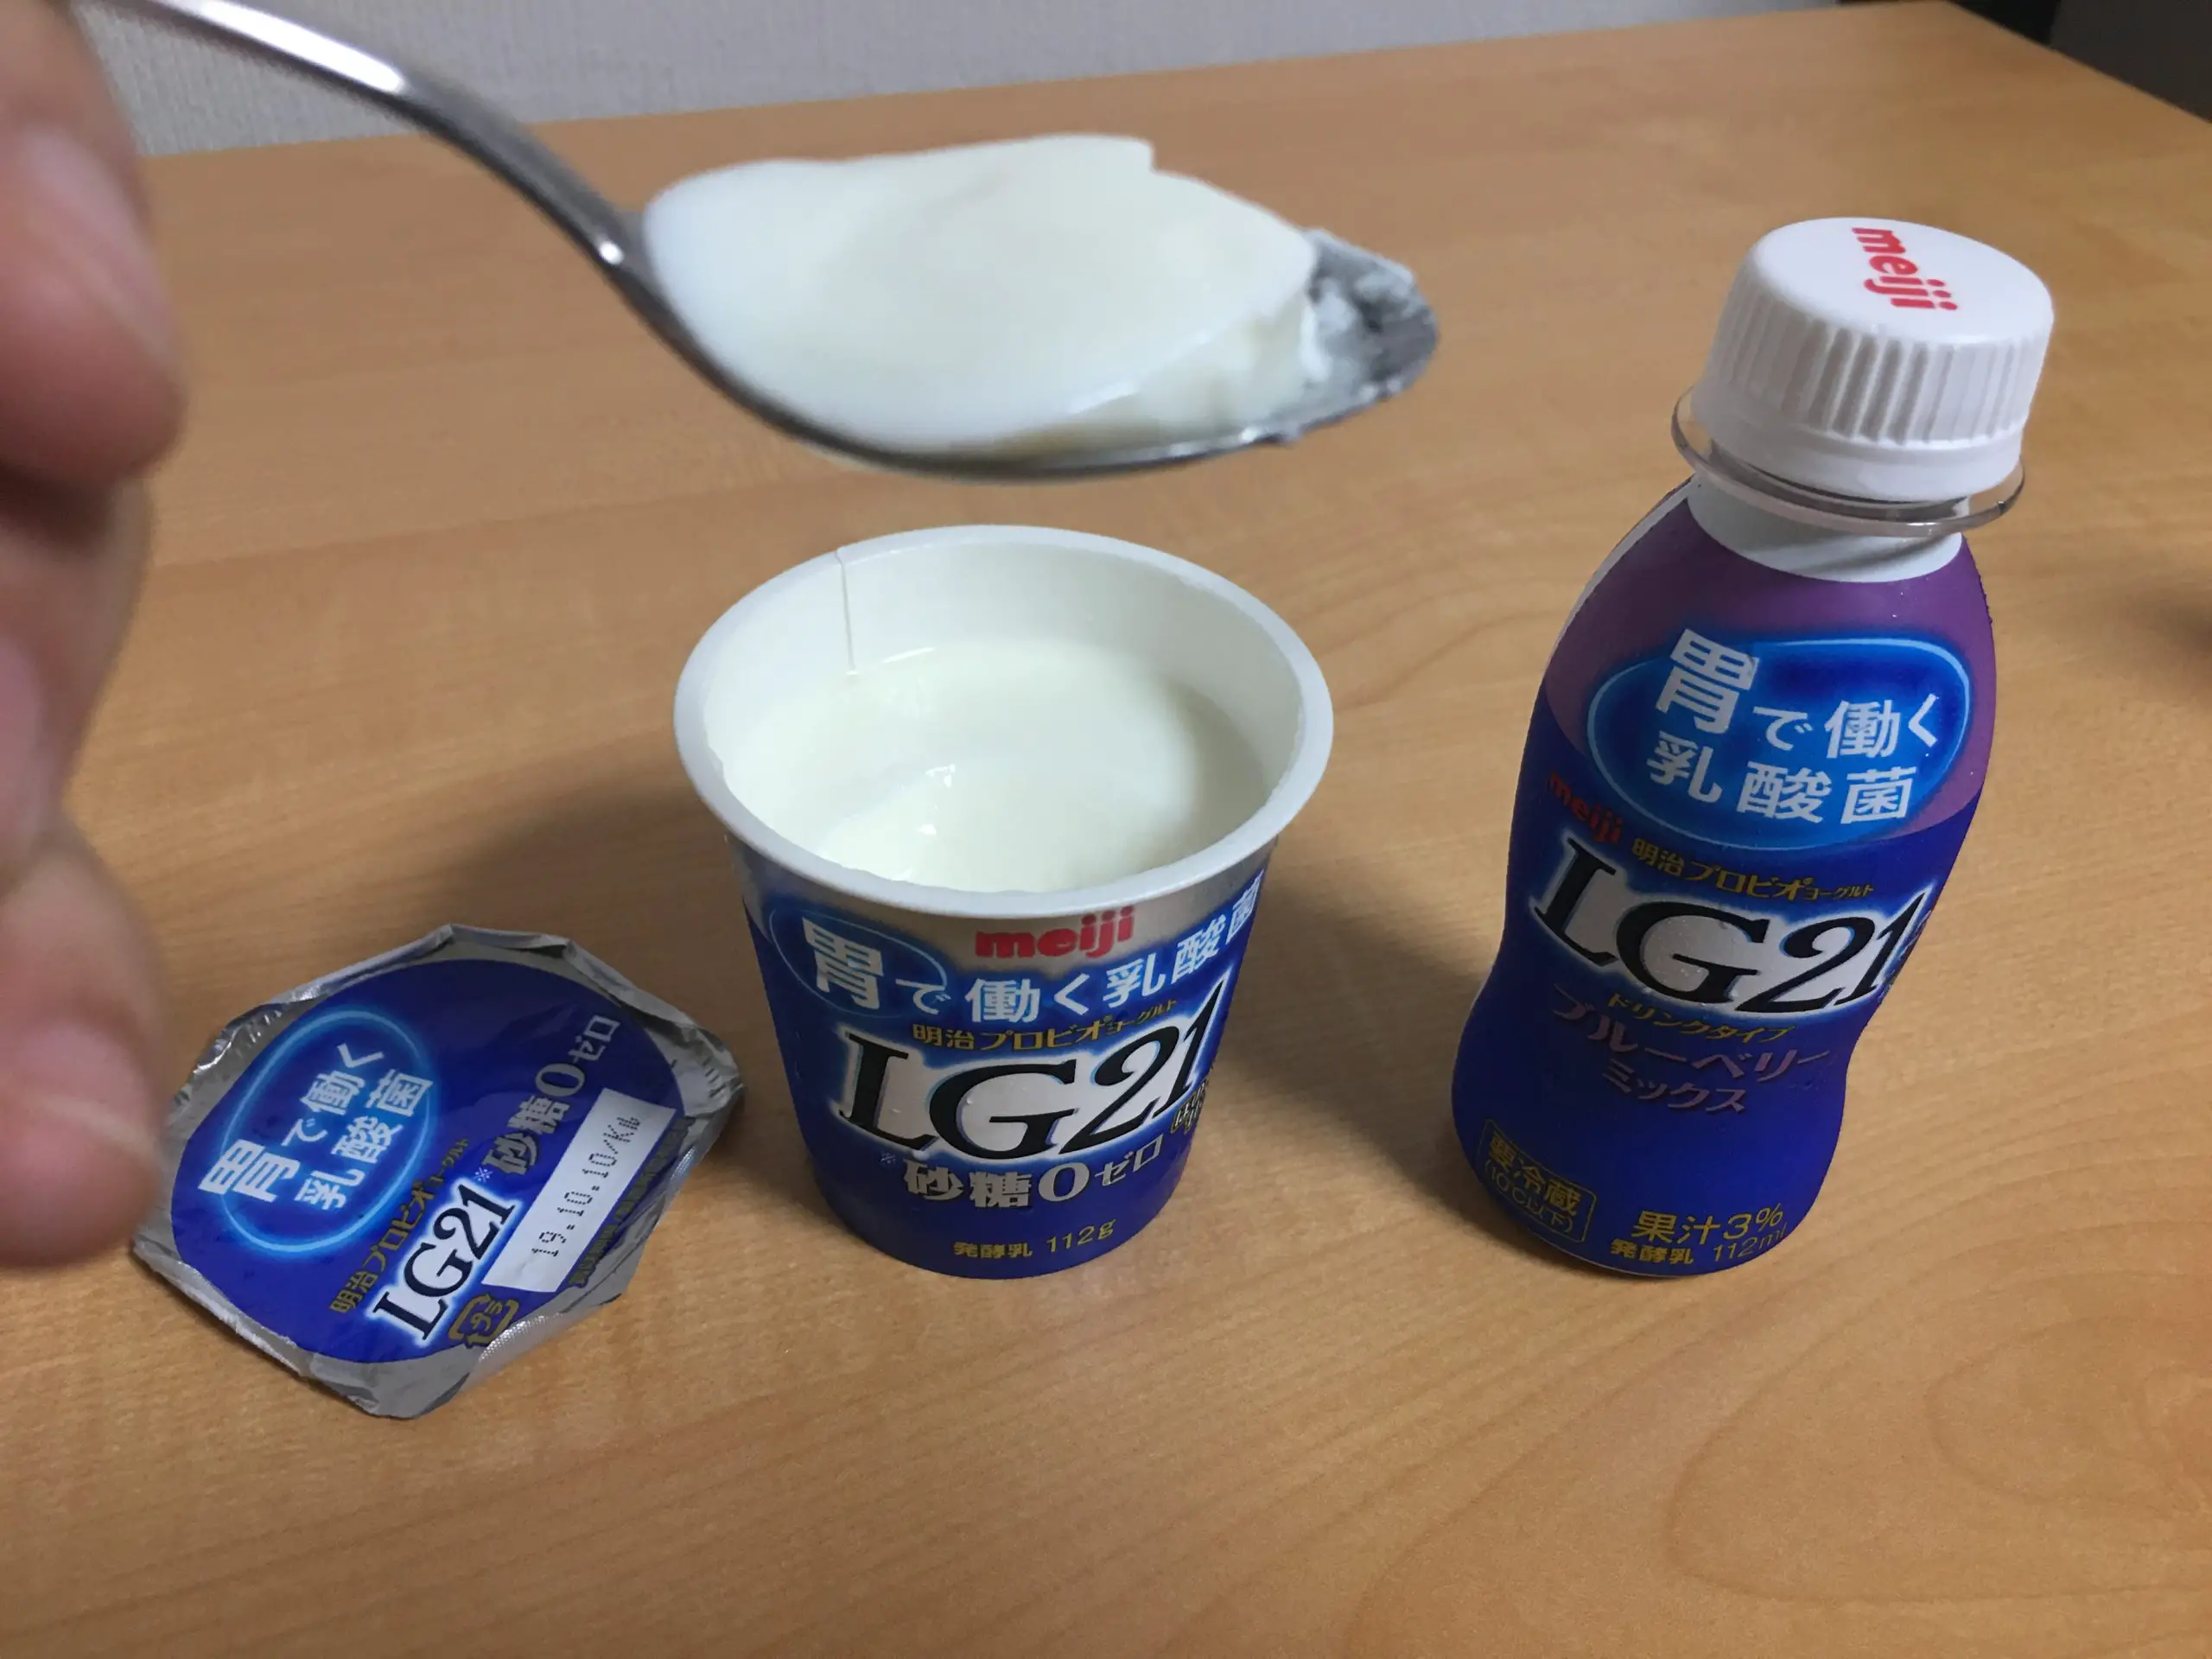 Meiji LG21 Yogurt: Effective in Inhibiting H. Pylori Activity ...